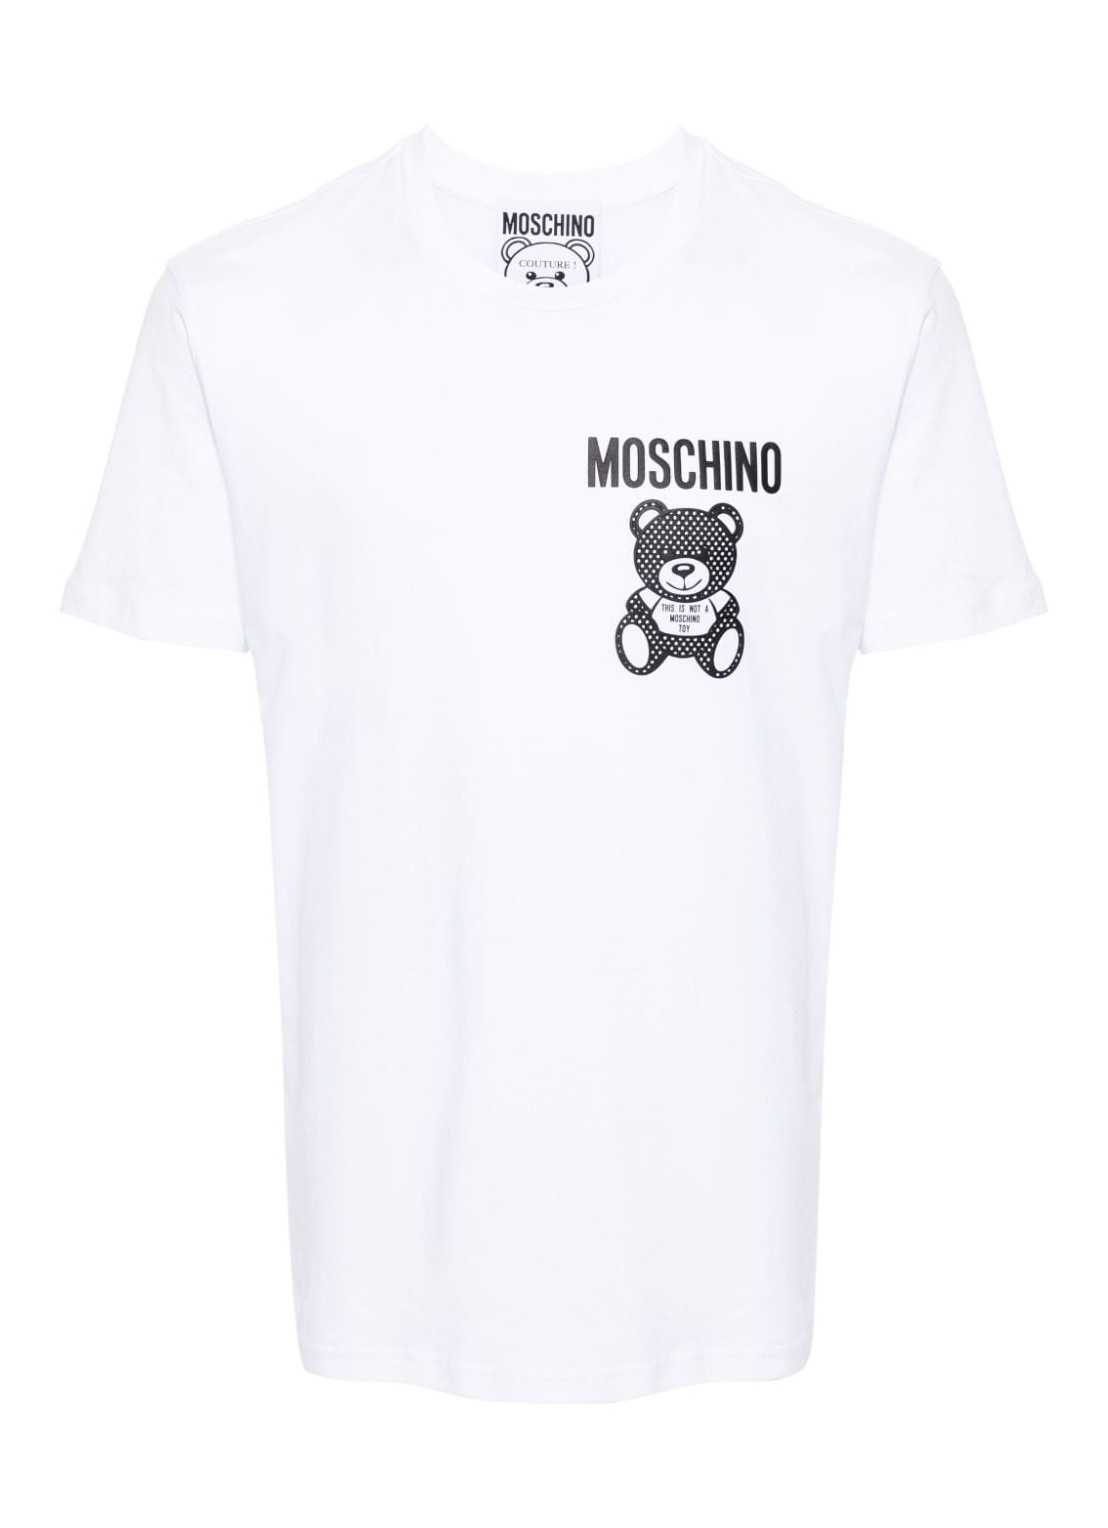 Camiseta moschino couture t-shirt man t-shirt 07292041 v1001 talla blanco
 